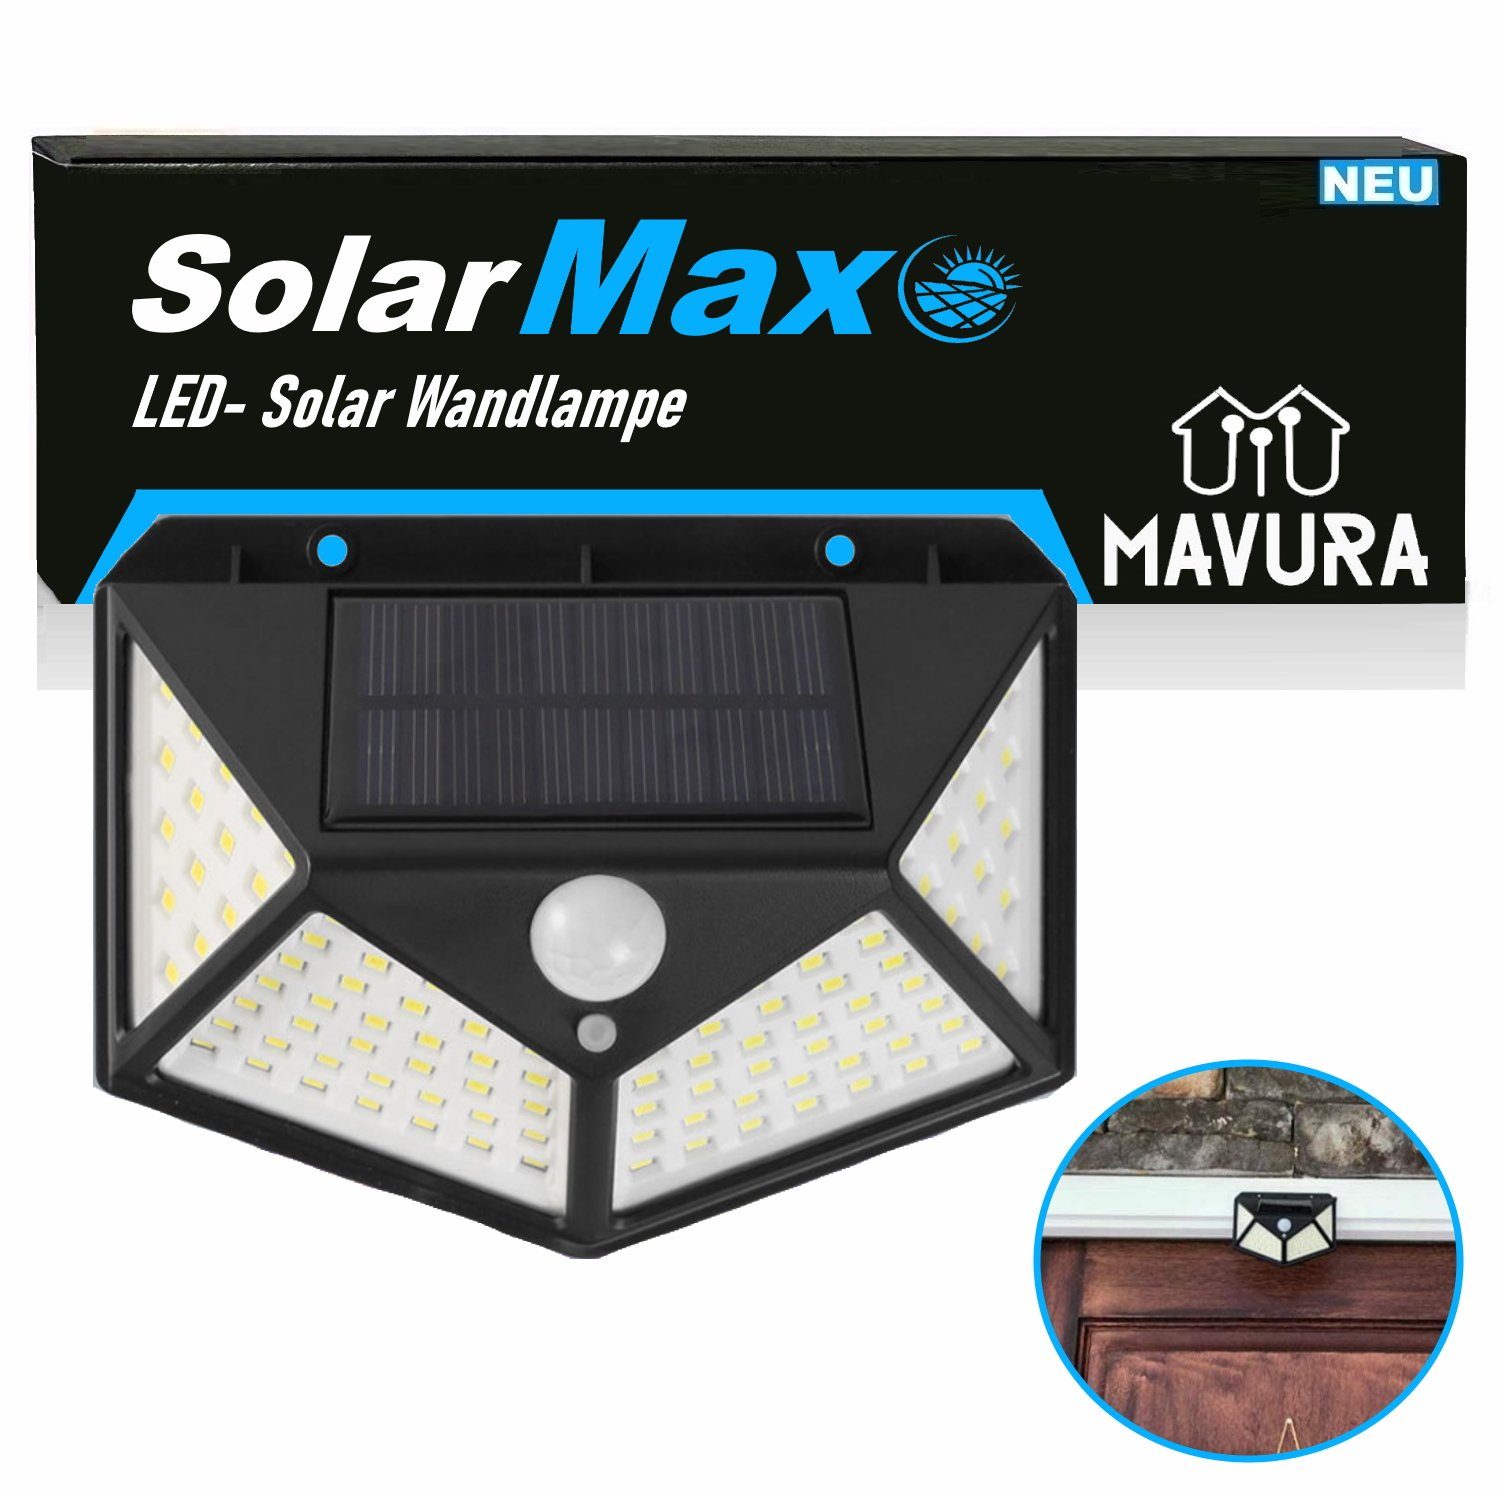 Wandlampe SolarMAX LED 308 LED Zaunleuchte Wandleuchte Außen MAVURA 270° Solarlampe, Bewegungsmelder Solar Solarleuchte Gartenleuchte LED mit für